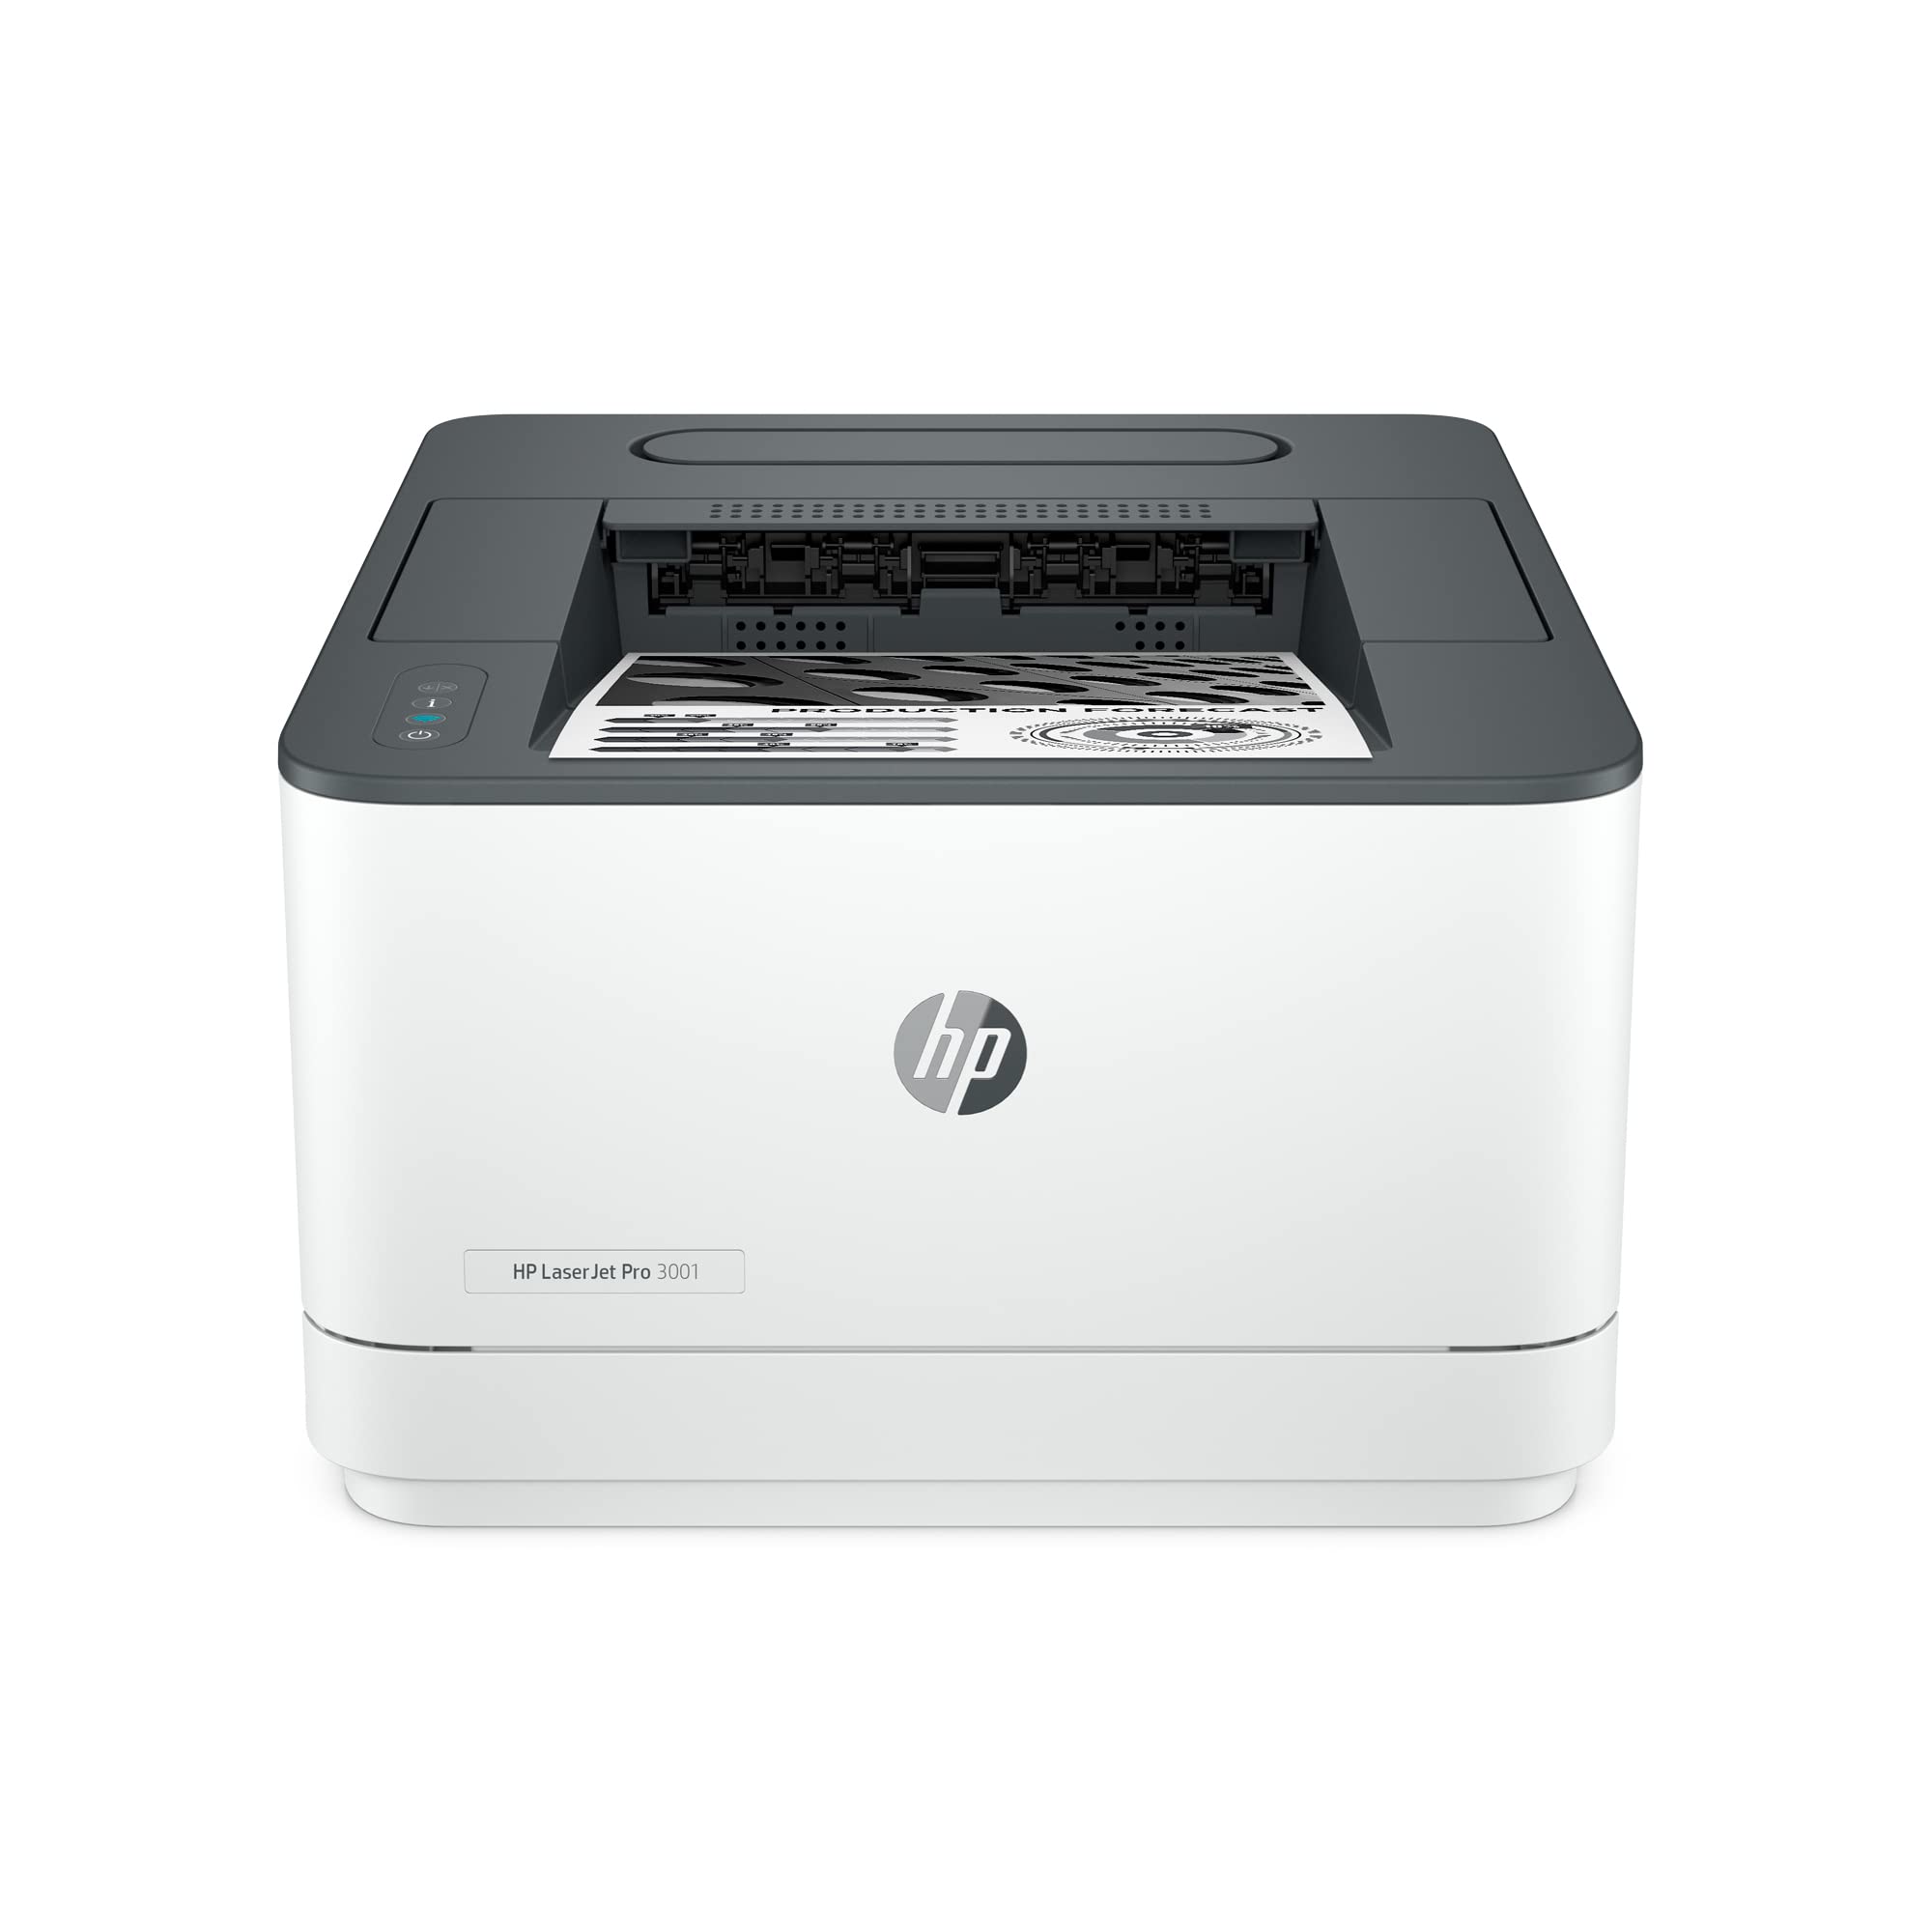 HP Laserjet Pro 4001ne Black & White Printer with +...